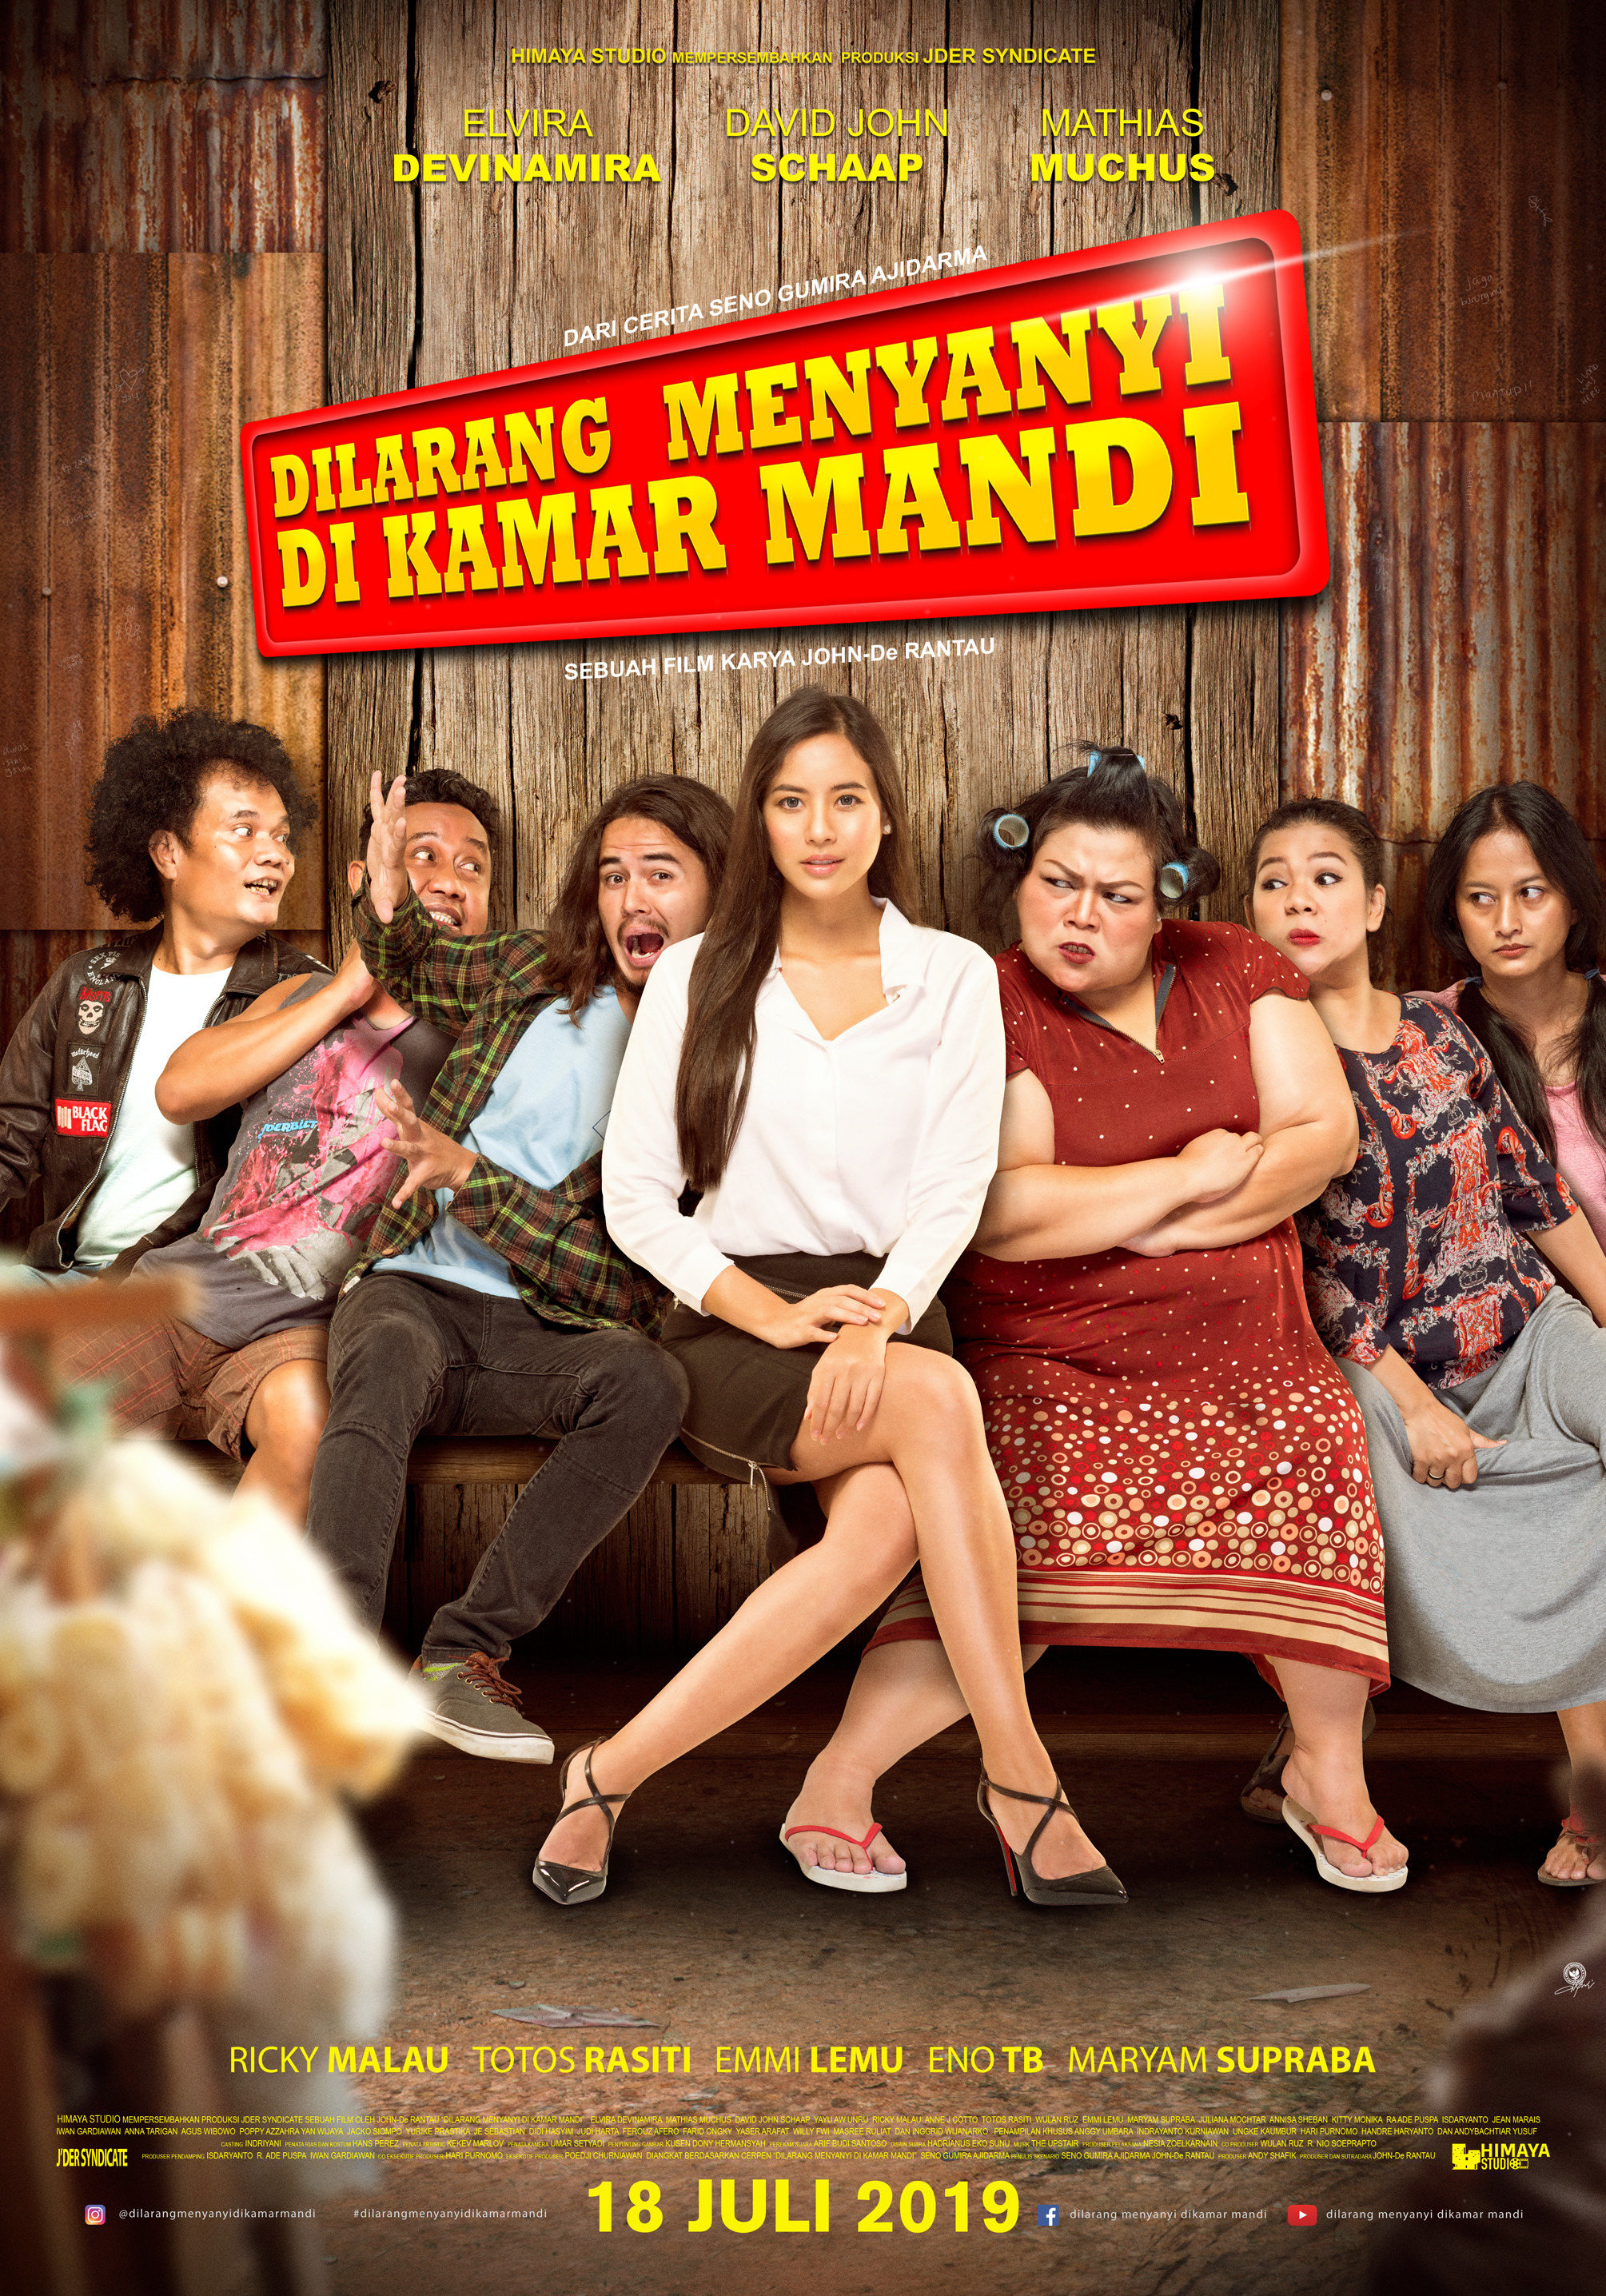 Mega Sized Movie Poster Image for Dilarang Menyanyi di Kamar Mandi (#1 of 2)